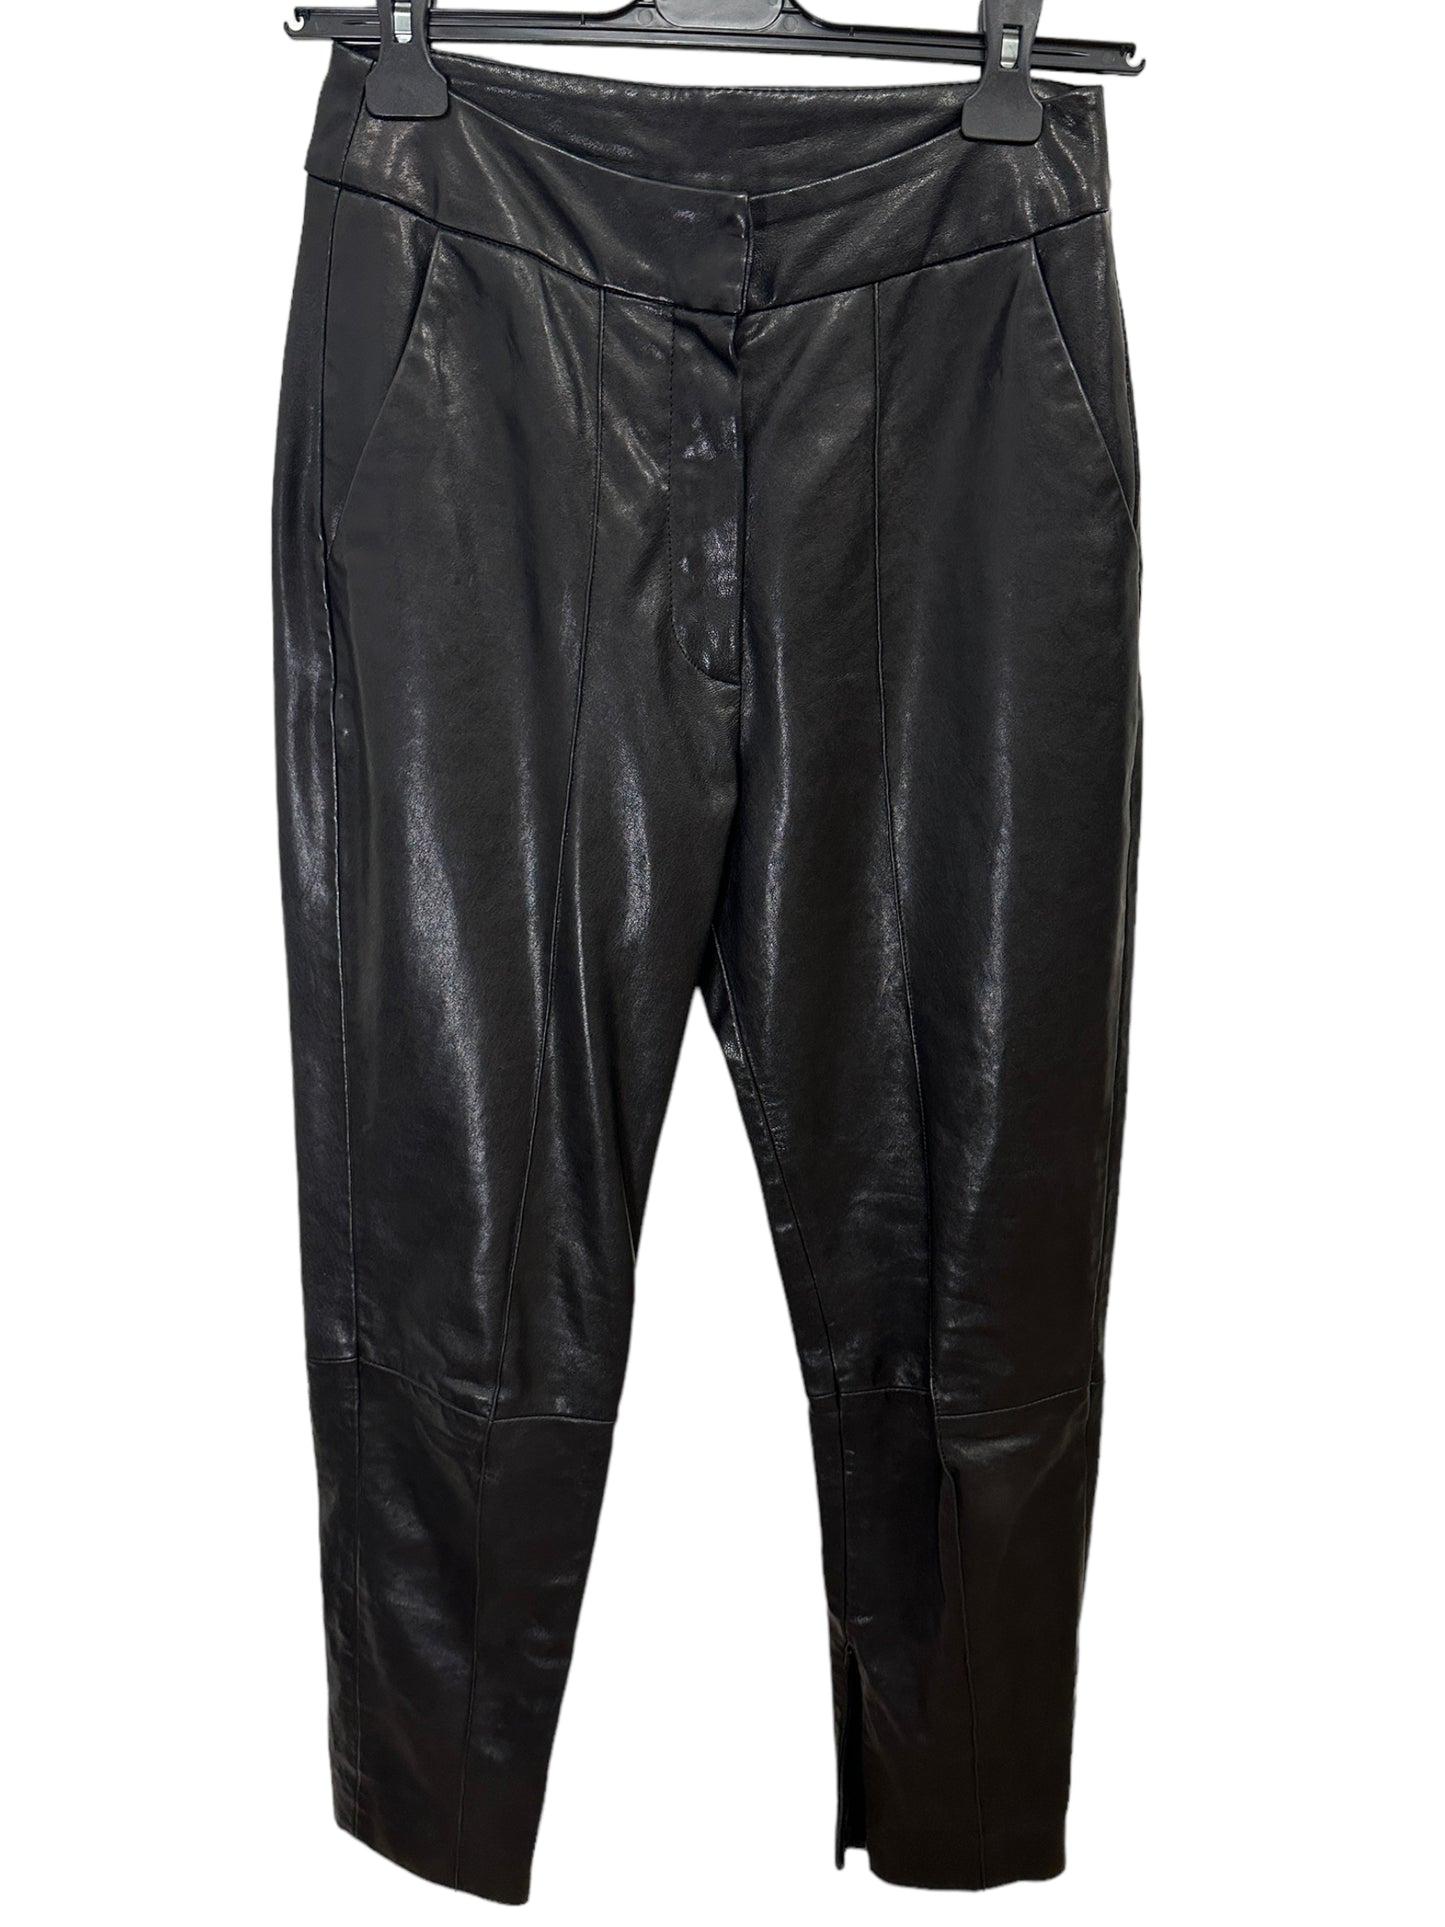 Pritch London - Leathere Pants -  Size UK8-10(US 4-6)